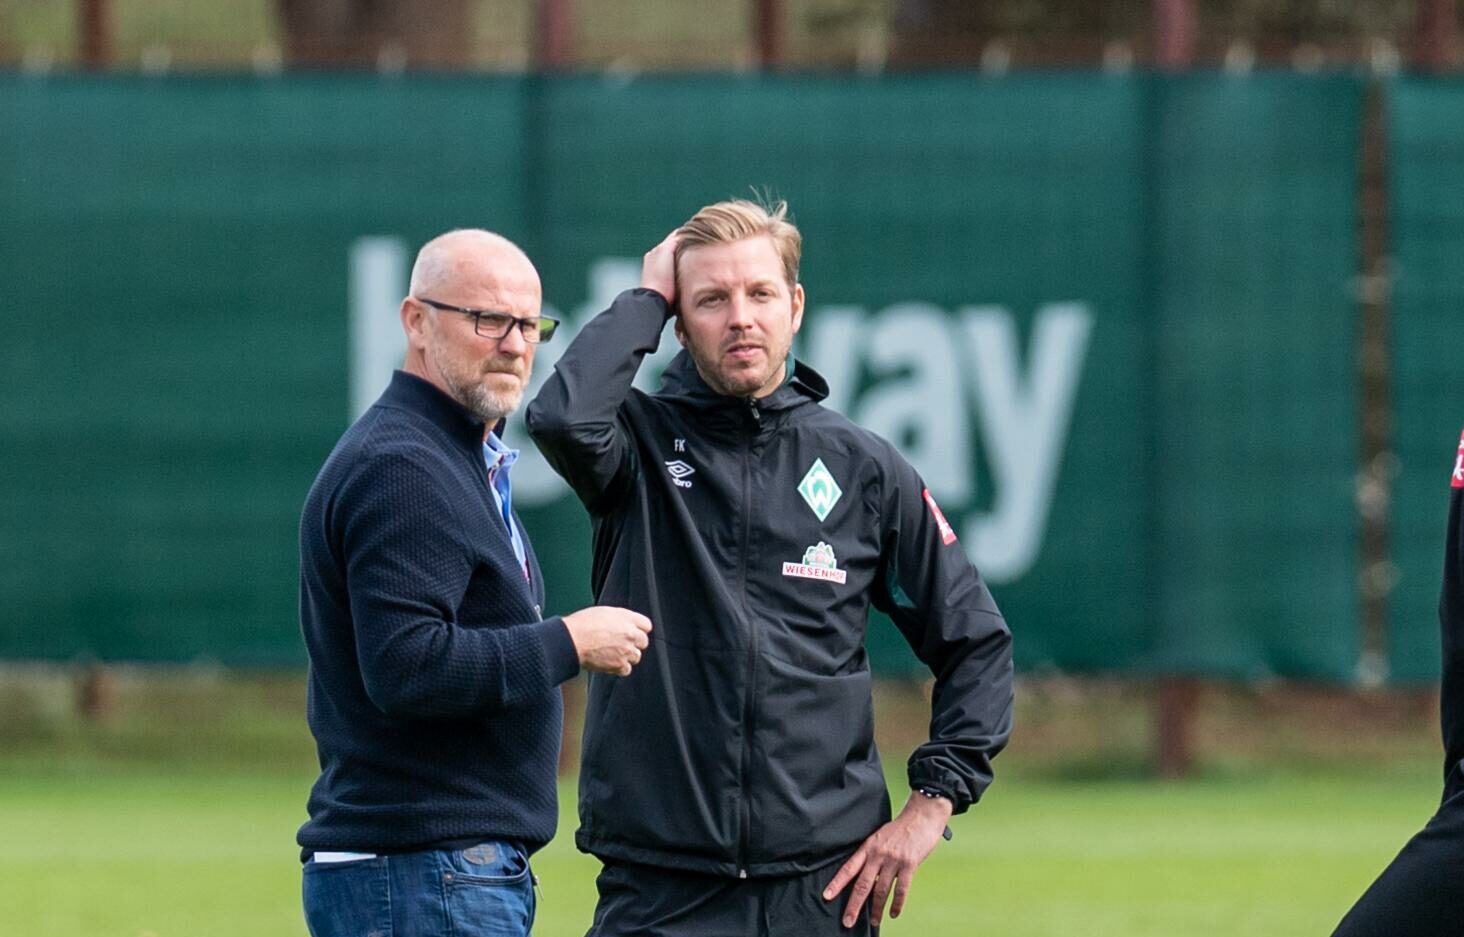 Offiziell: Werder Bremen entlässt Kohfeldt! Schaaf übernimmt